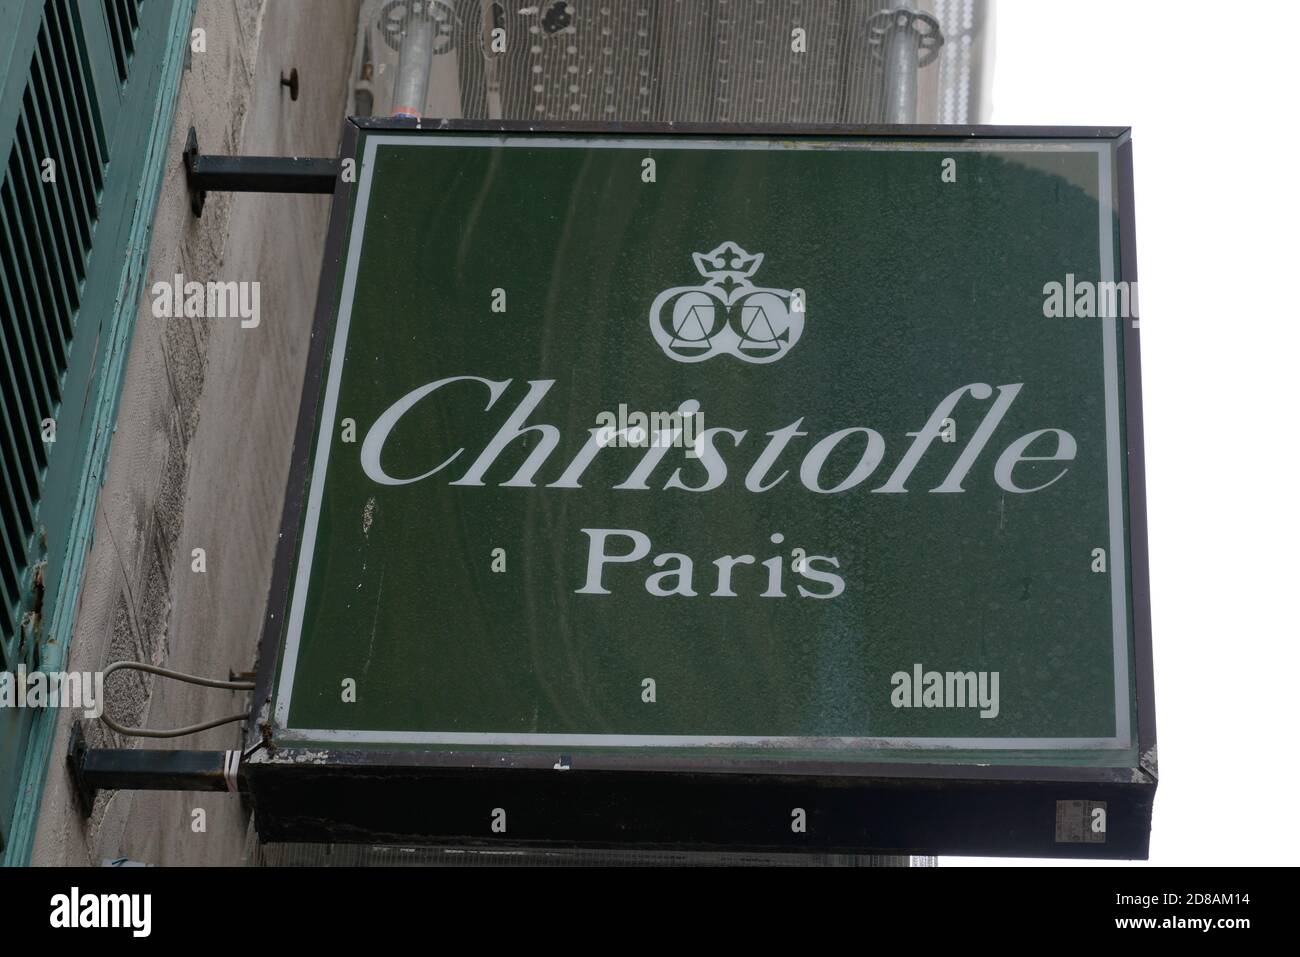 Bordeaux , Aquitaine / France - 10 20 2020 : Christofle logo sign on ...